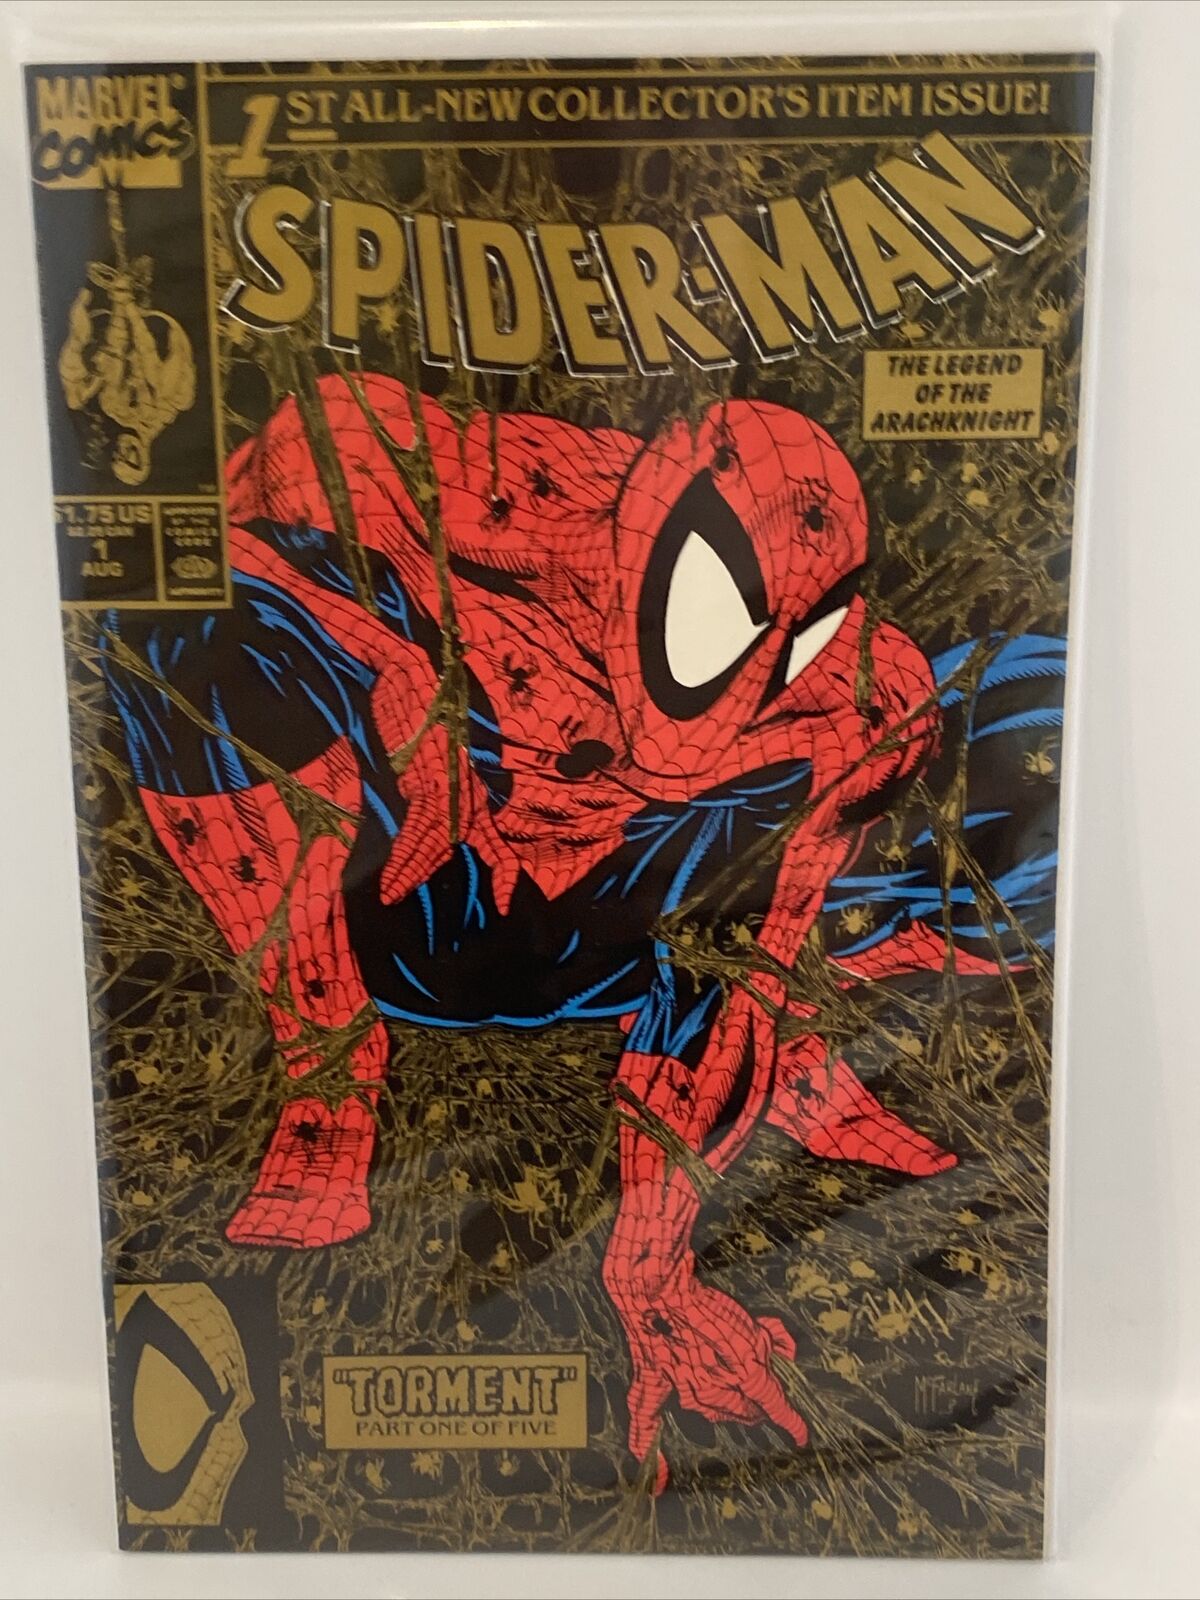 Spider-Man #1 Legend of the Arachknight Marvel 1990 Aug Gold Cover